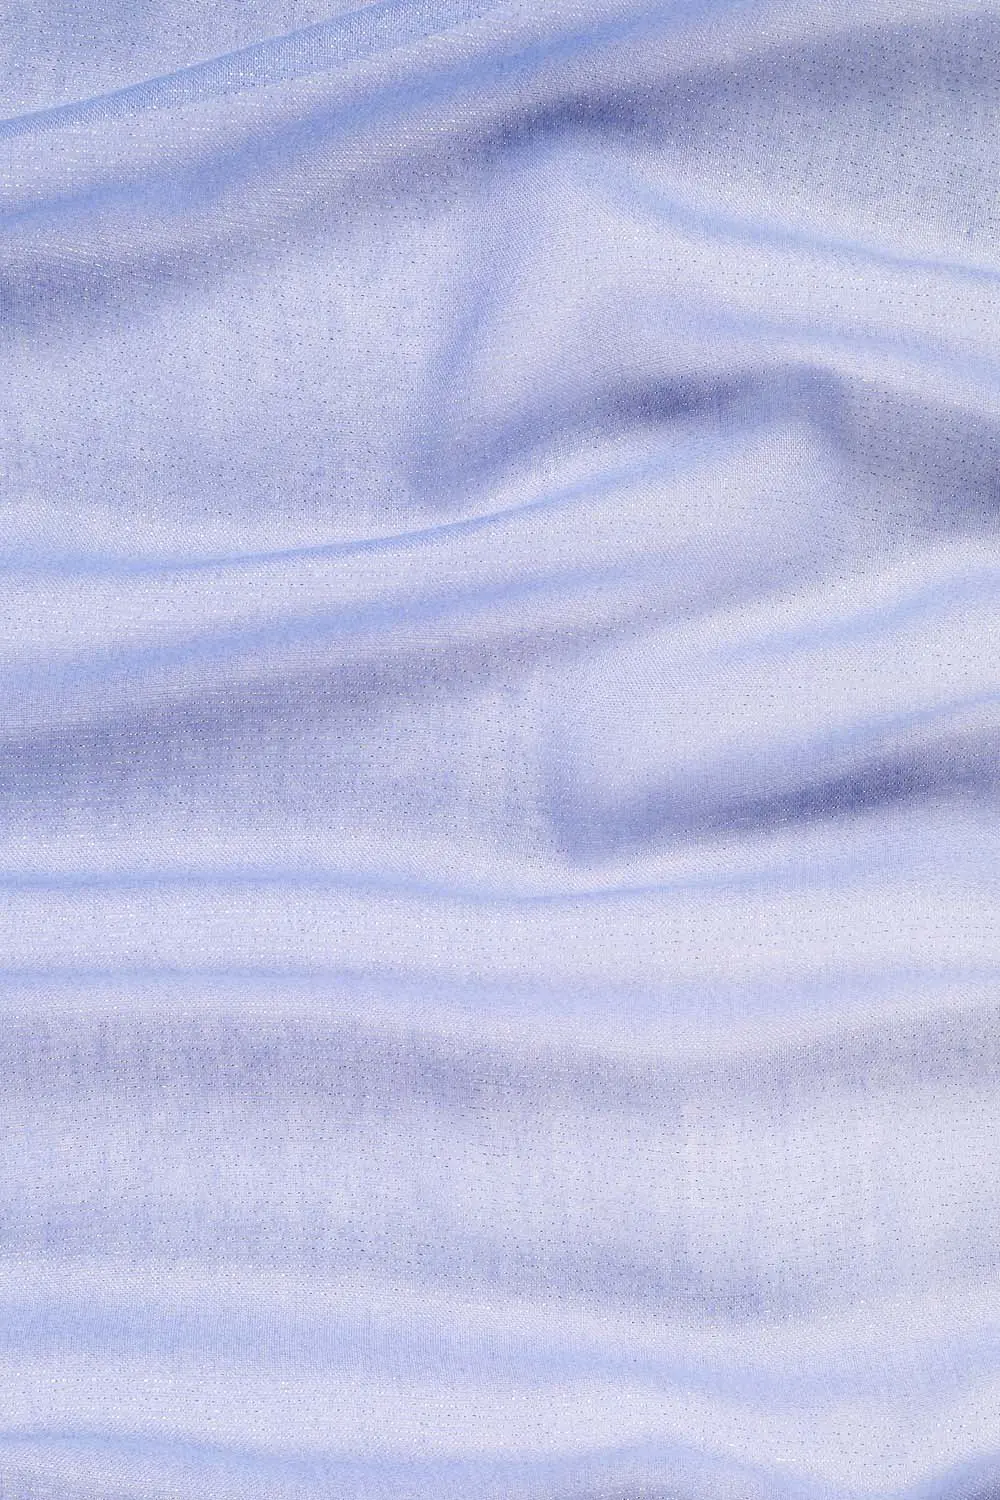 Apaszka - Glittery Blue